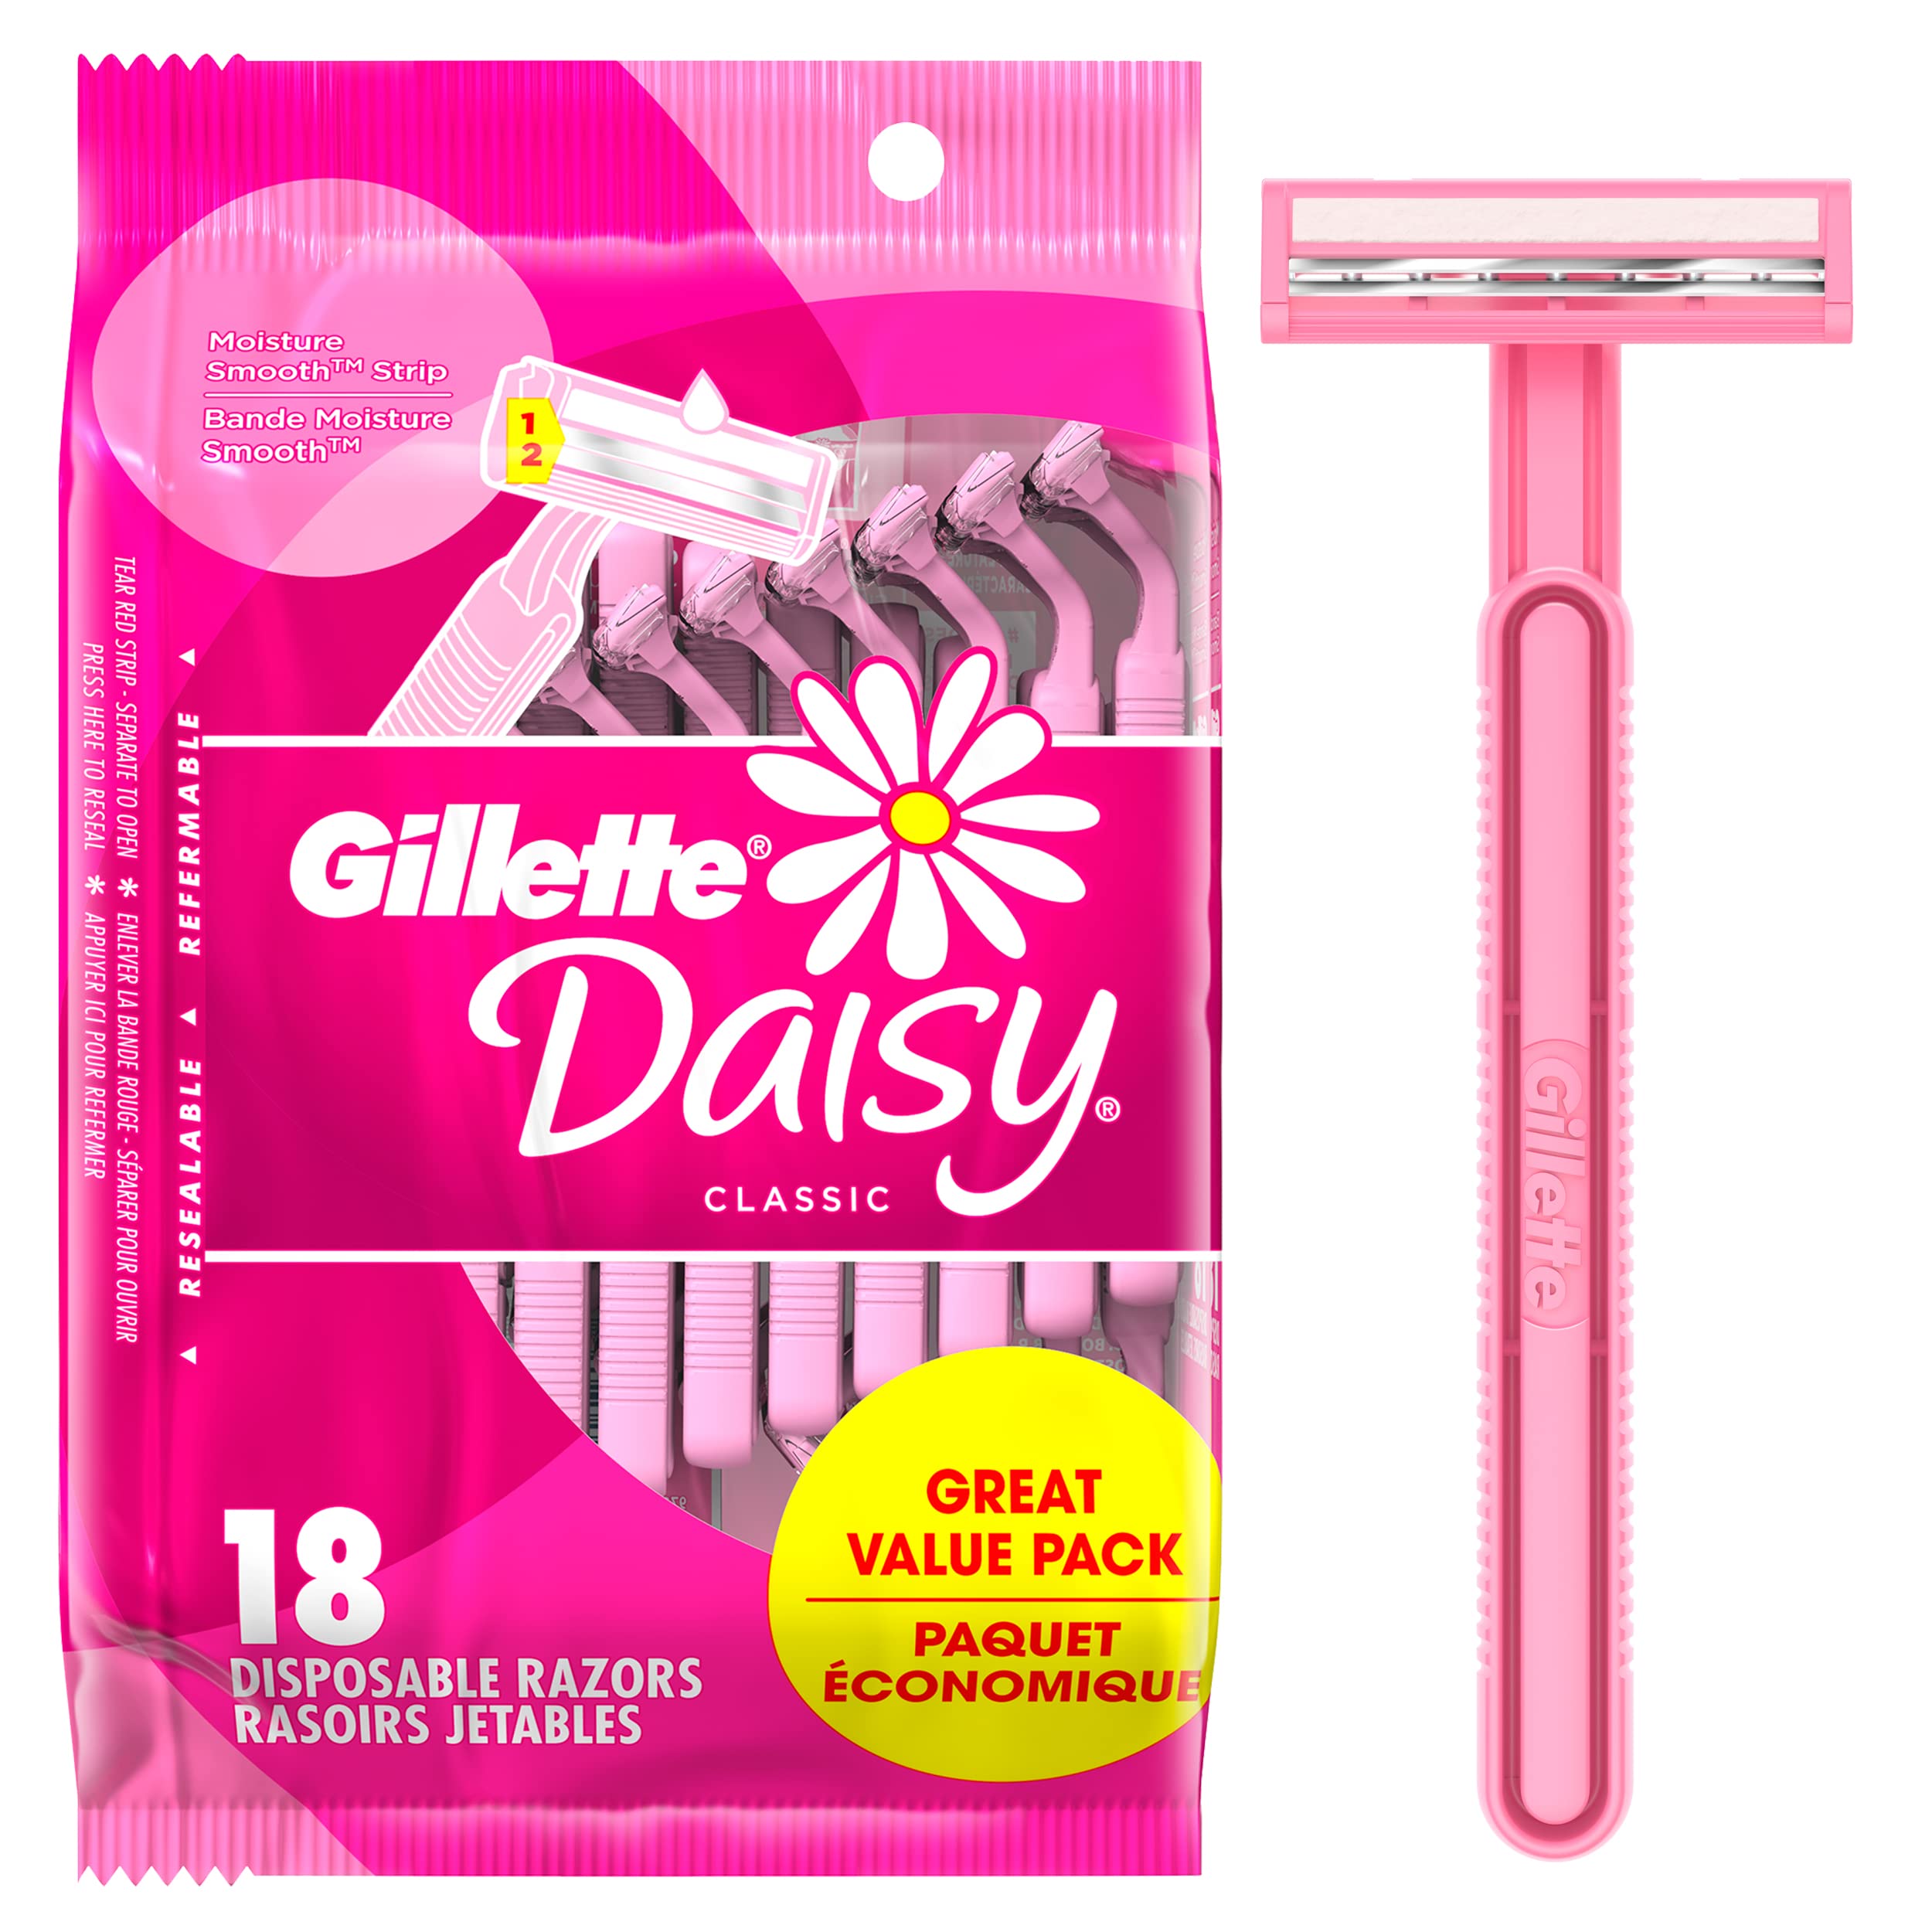 Gillette Venus Daisy Classic Disposable Razors for Women, 18 Count